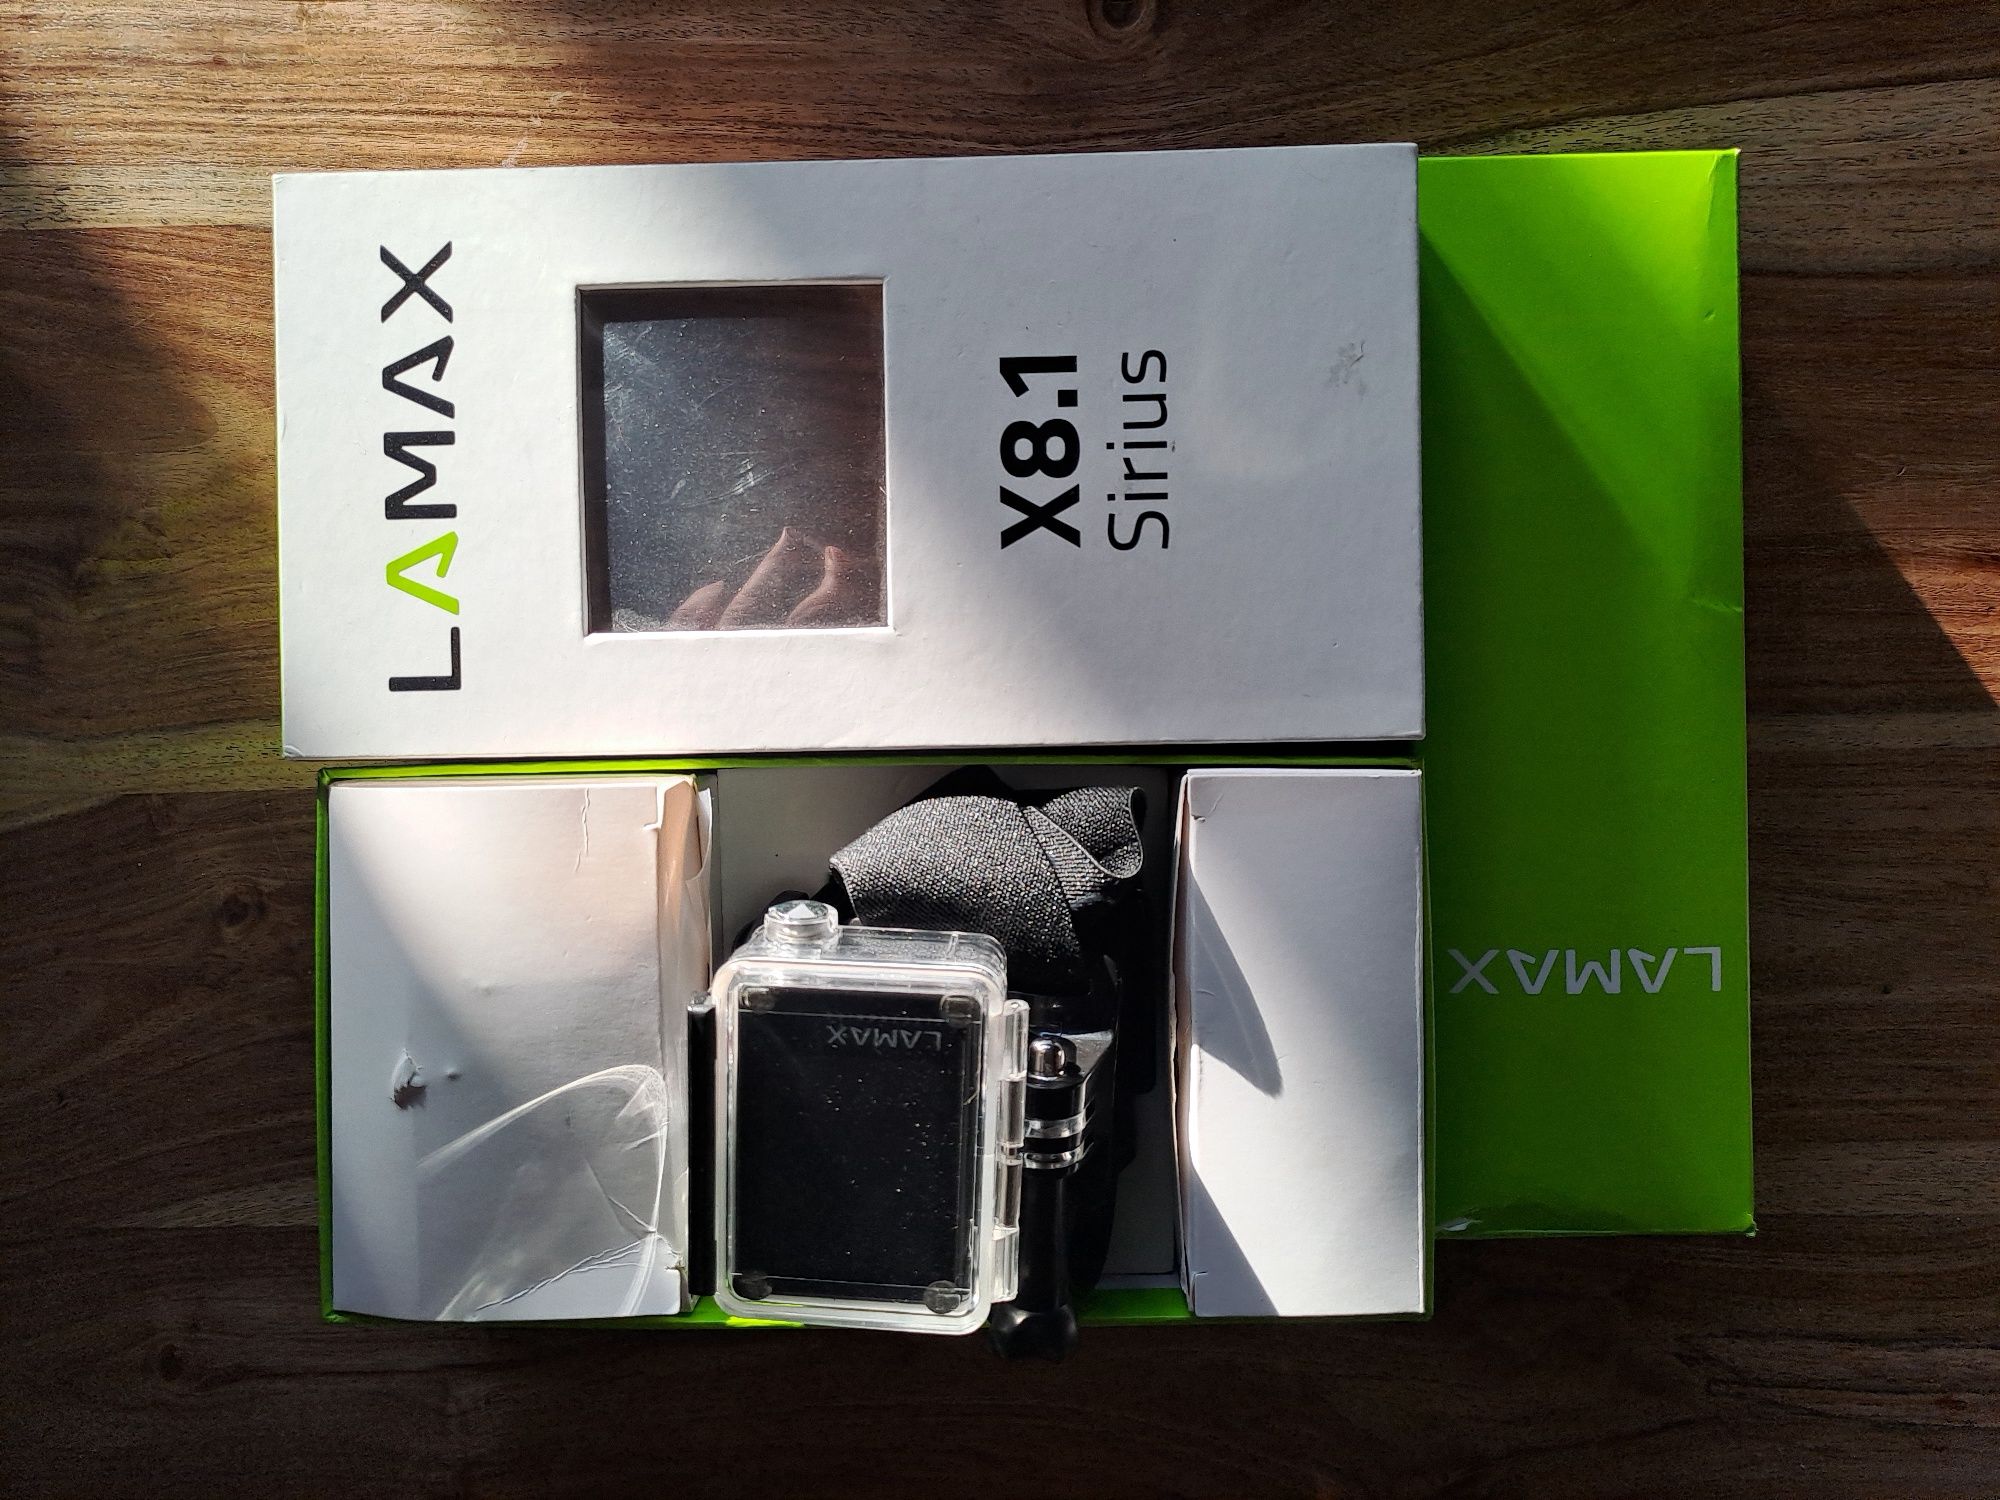 Kamera sportowa Lamax X8.1 Sirius